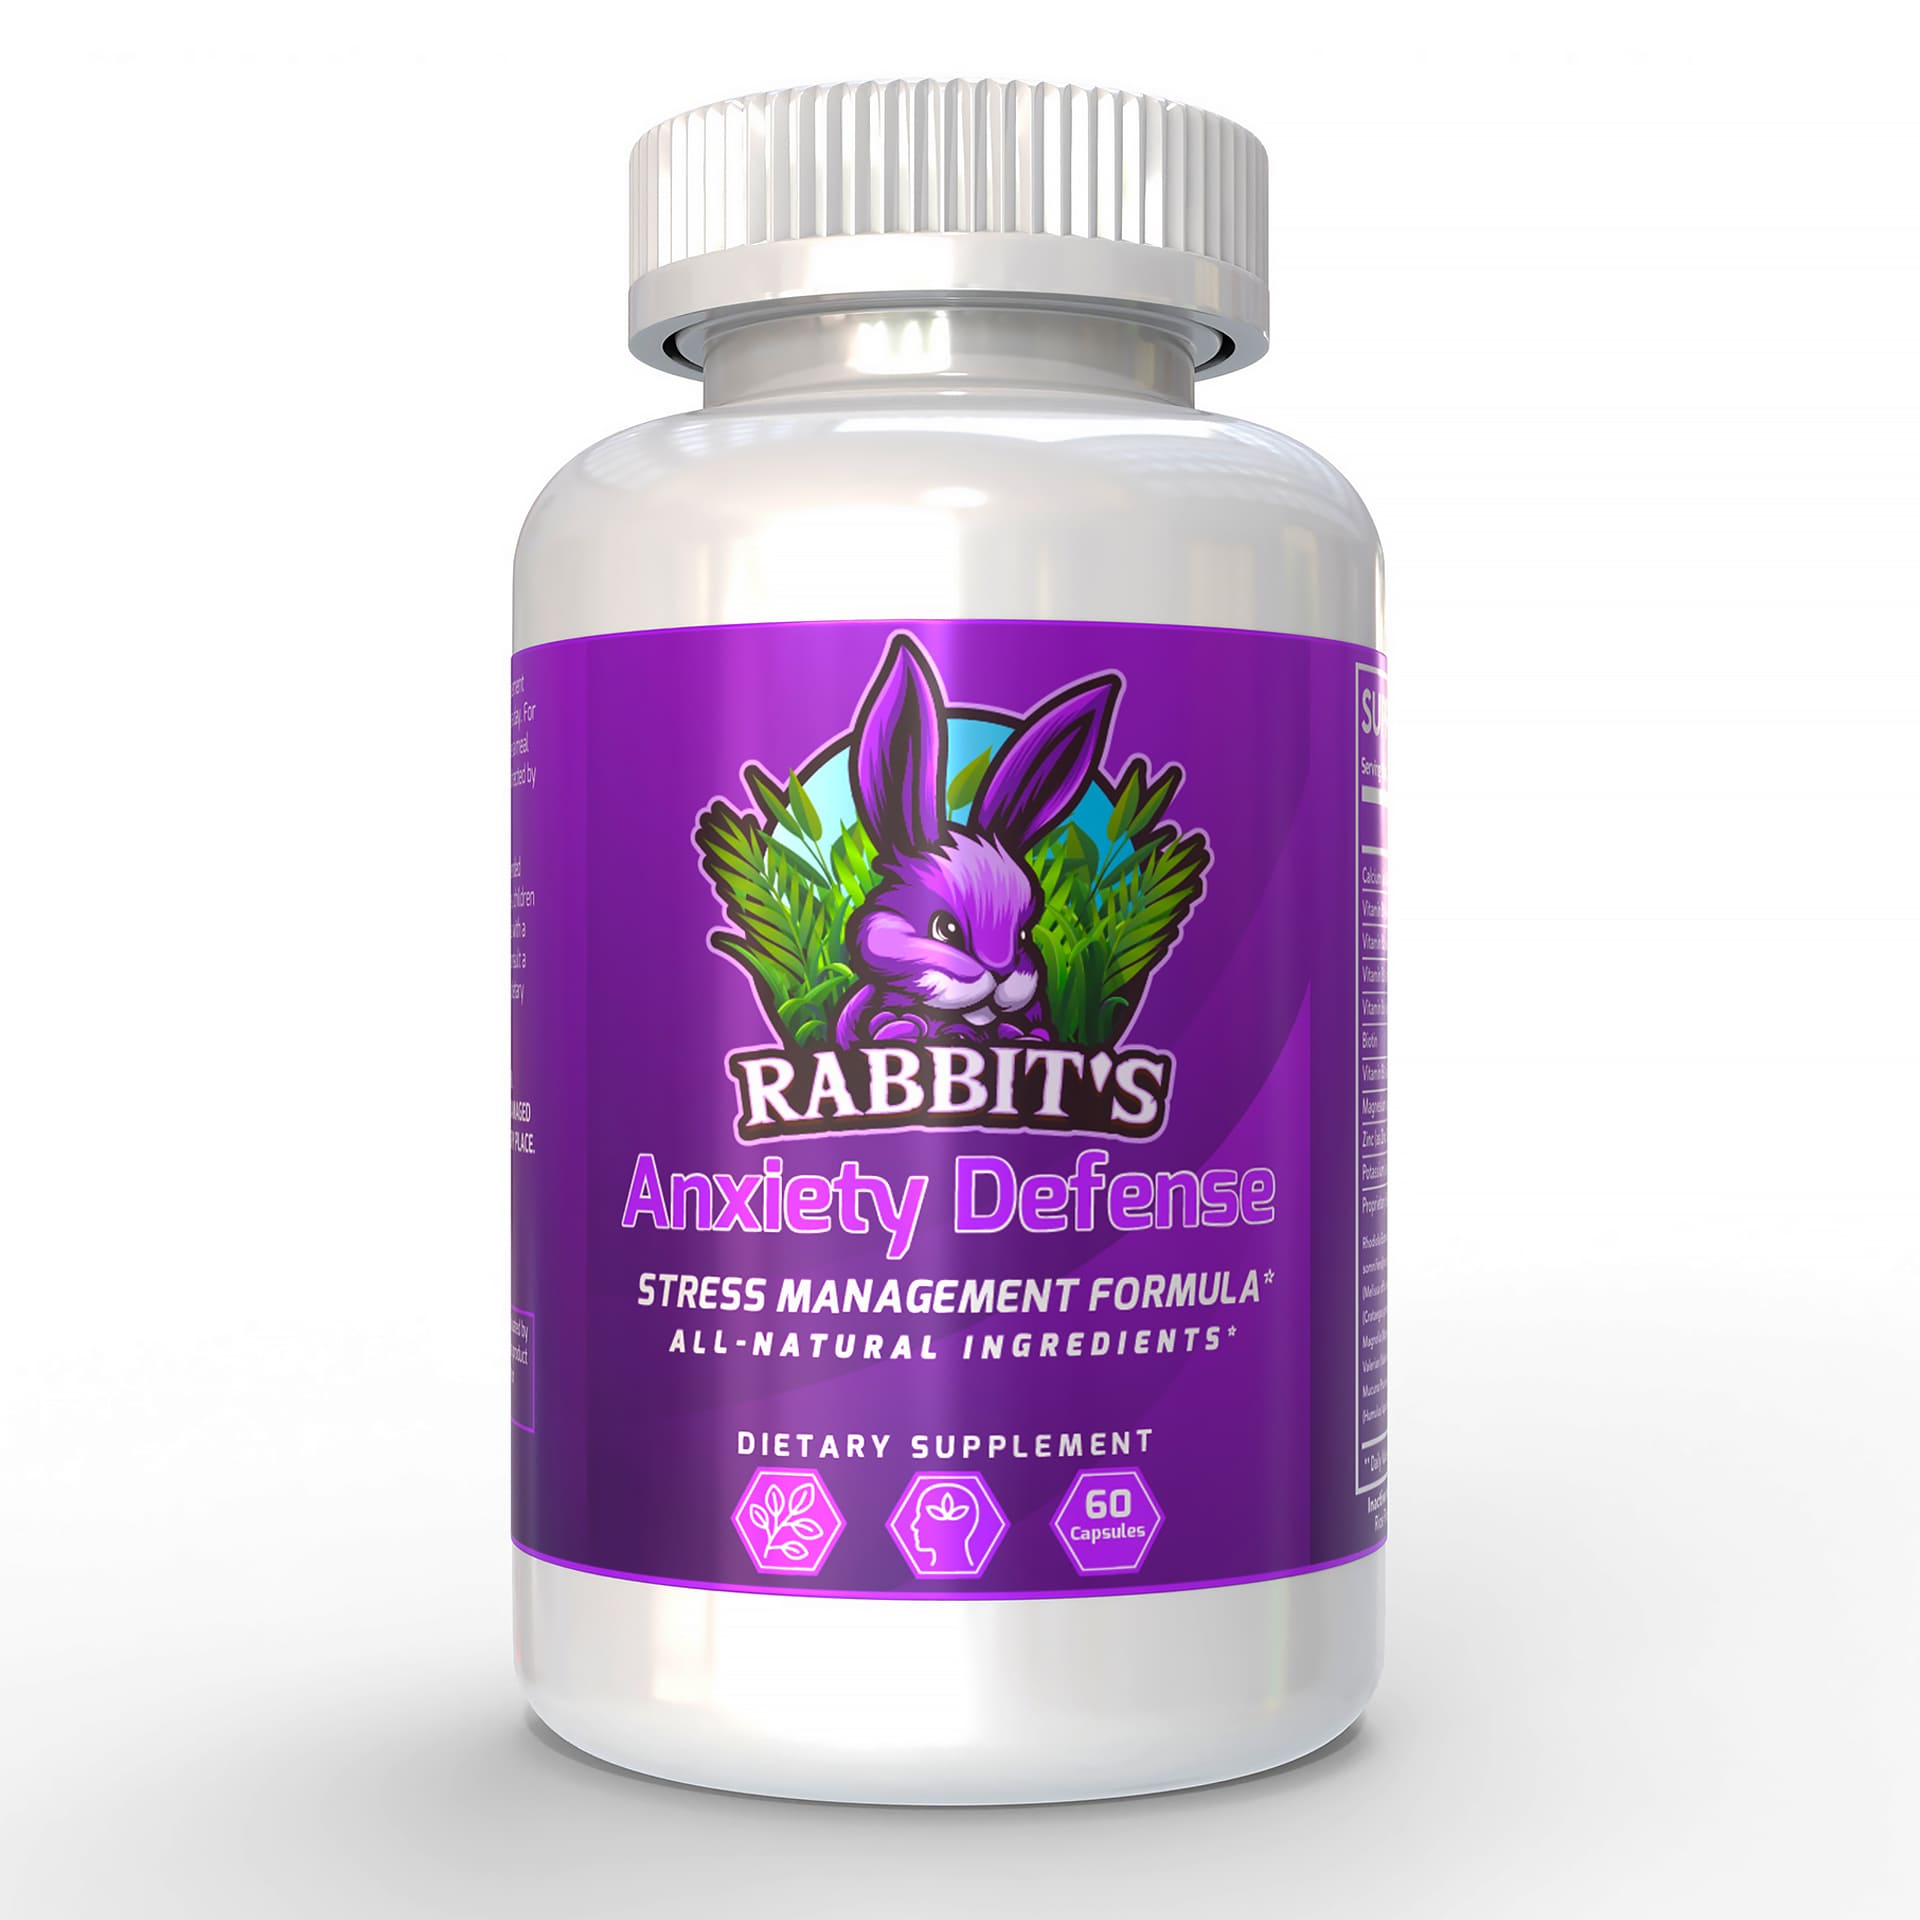 Anxiety Defense